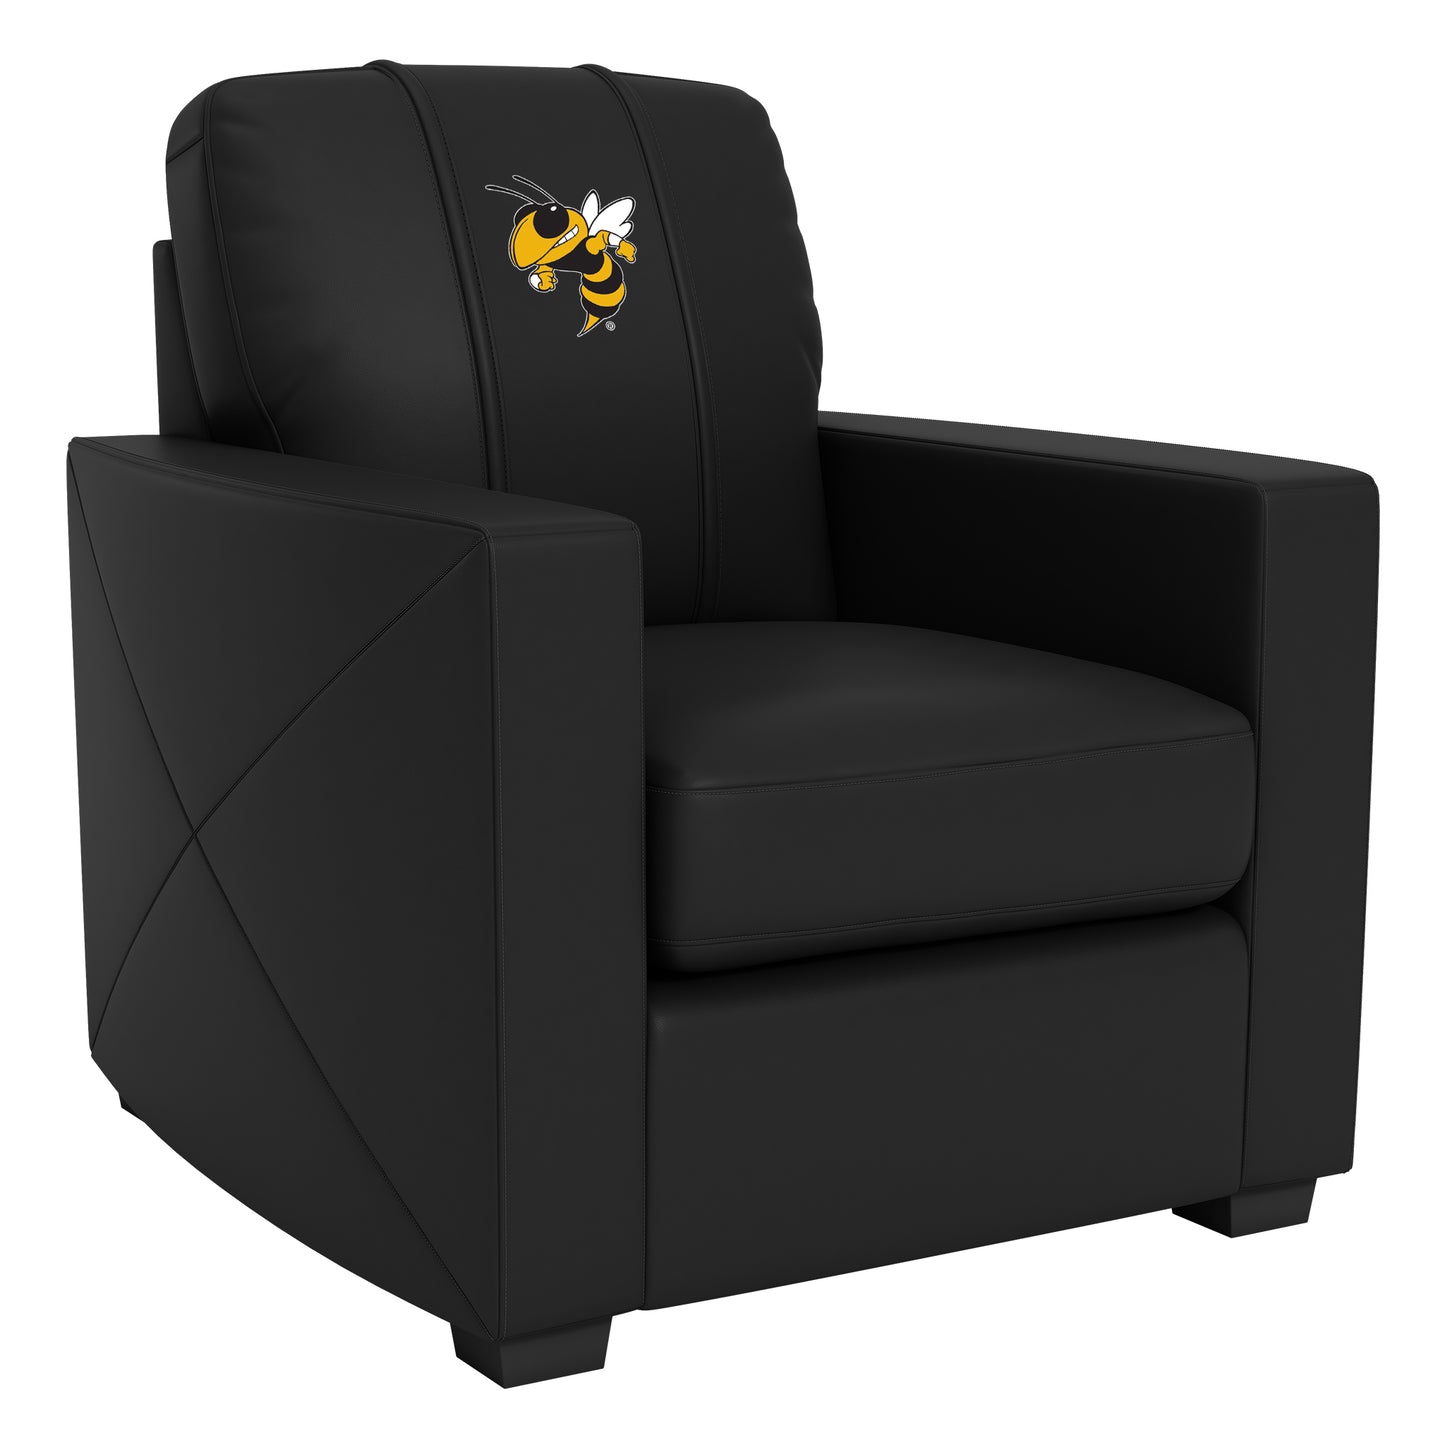 Silver Club Chair with Georgia Tech Yellow Jackets Buzz Logo